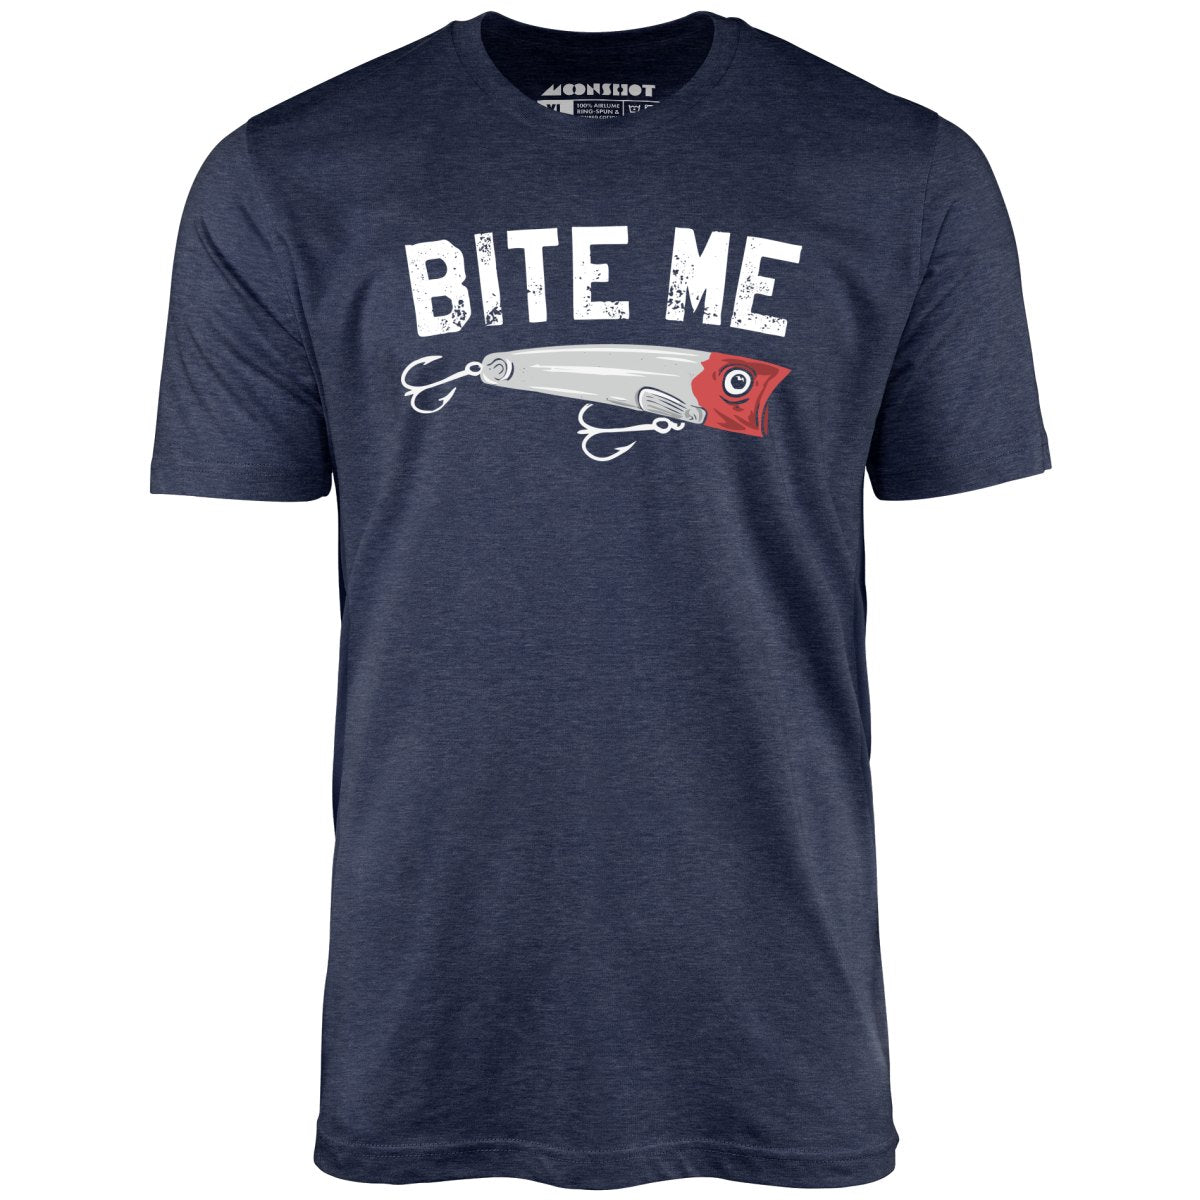 Bite Me - Unisex T-Shirt